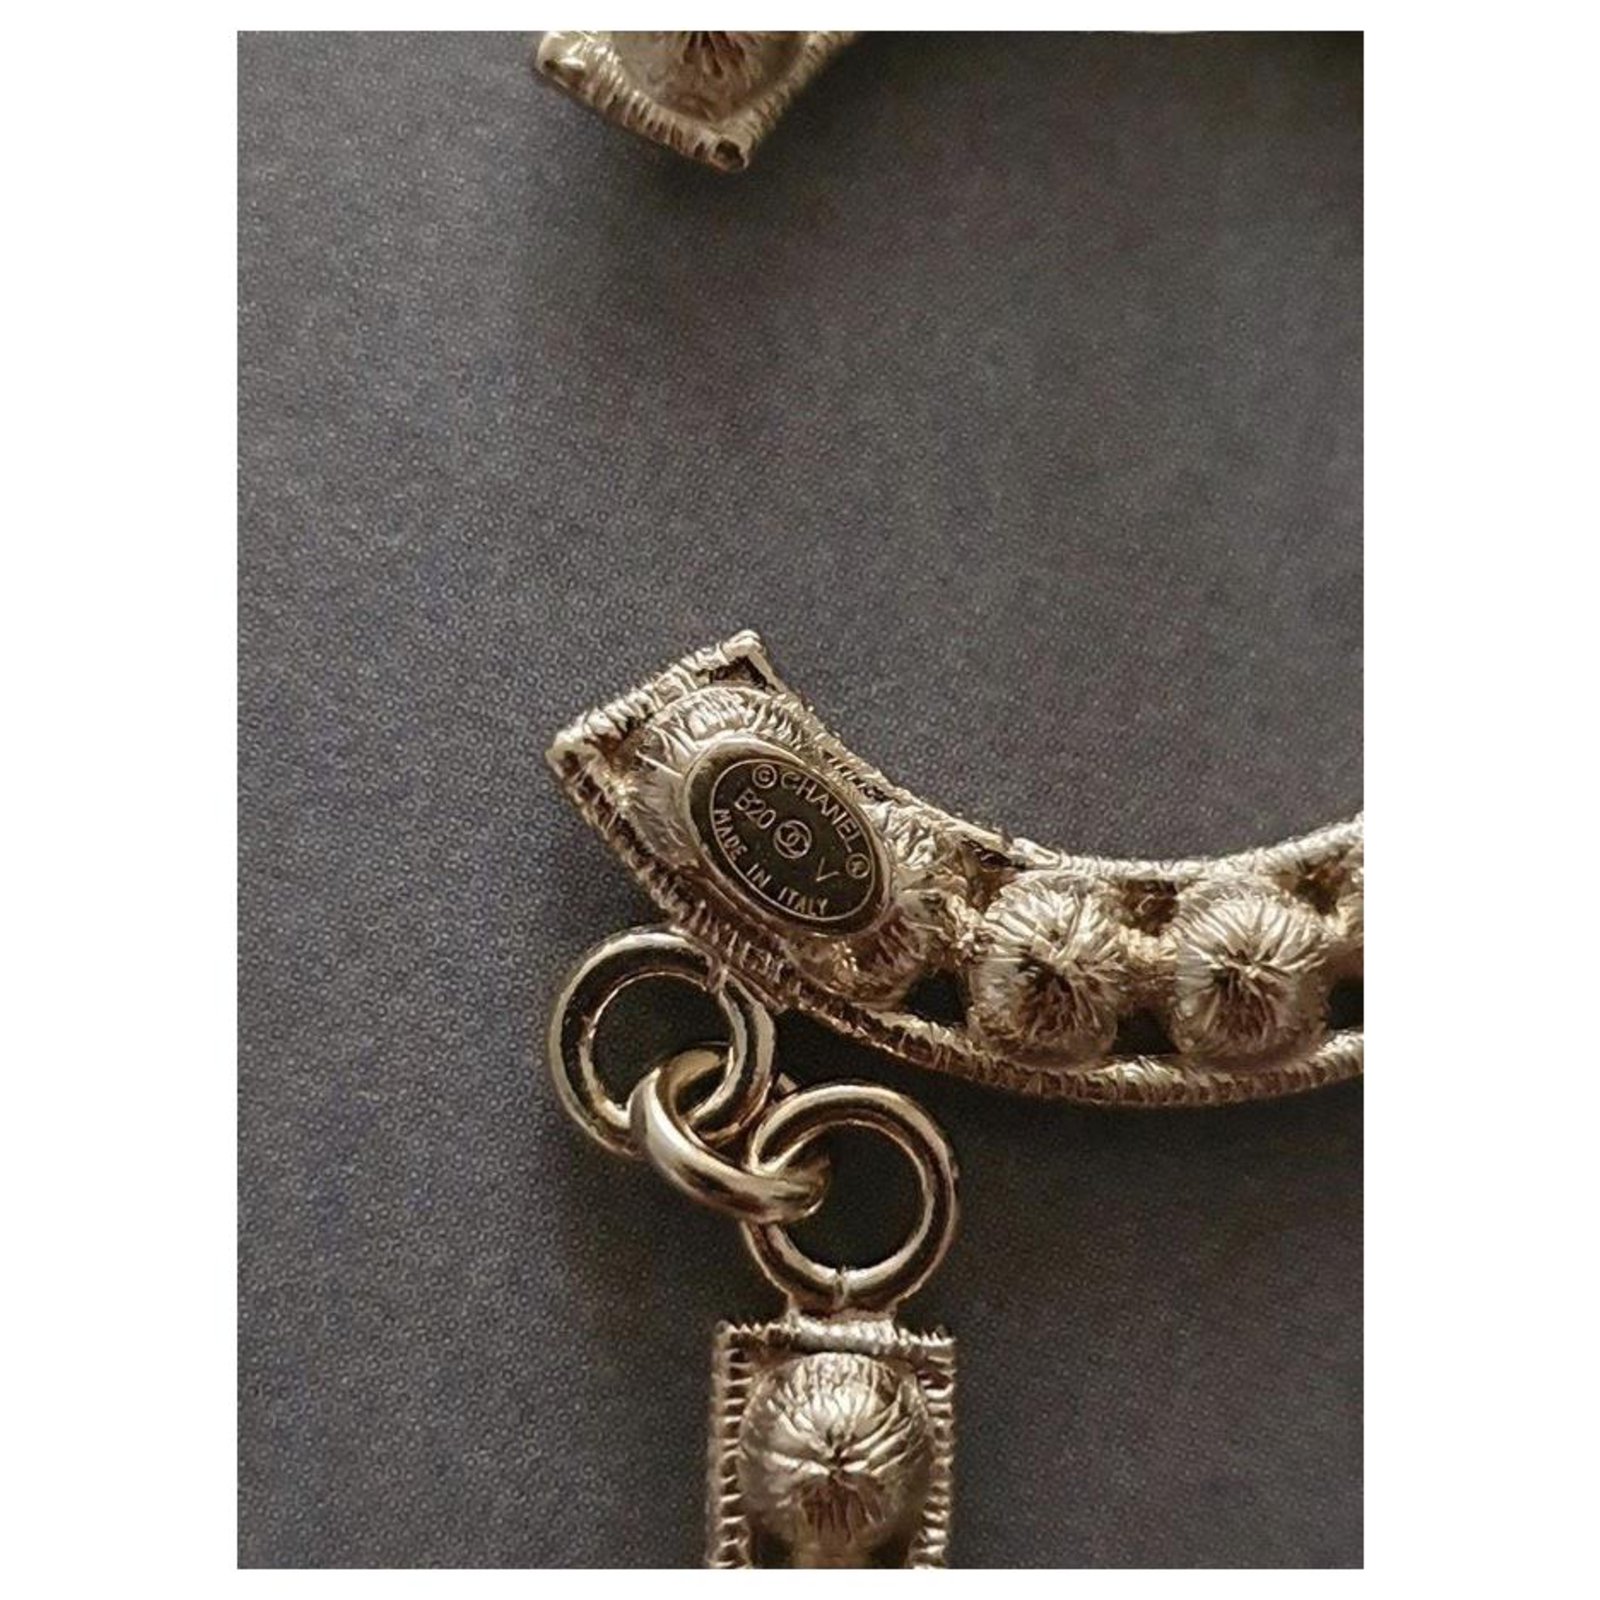 Classic chanel earrings or - Gem